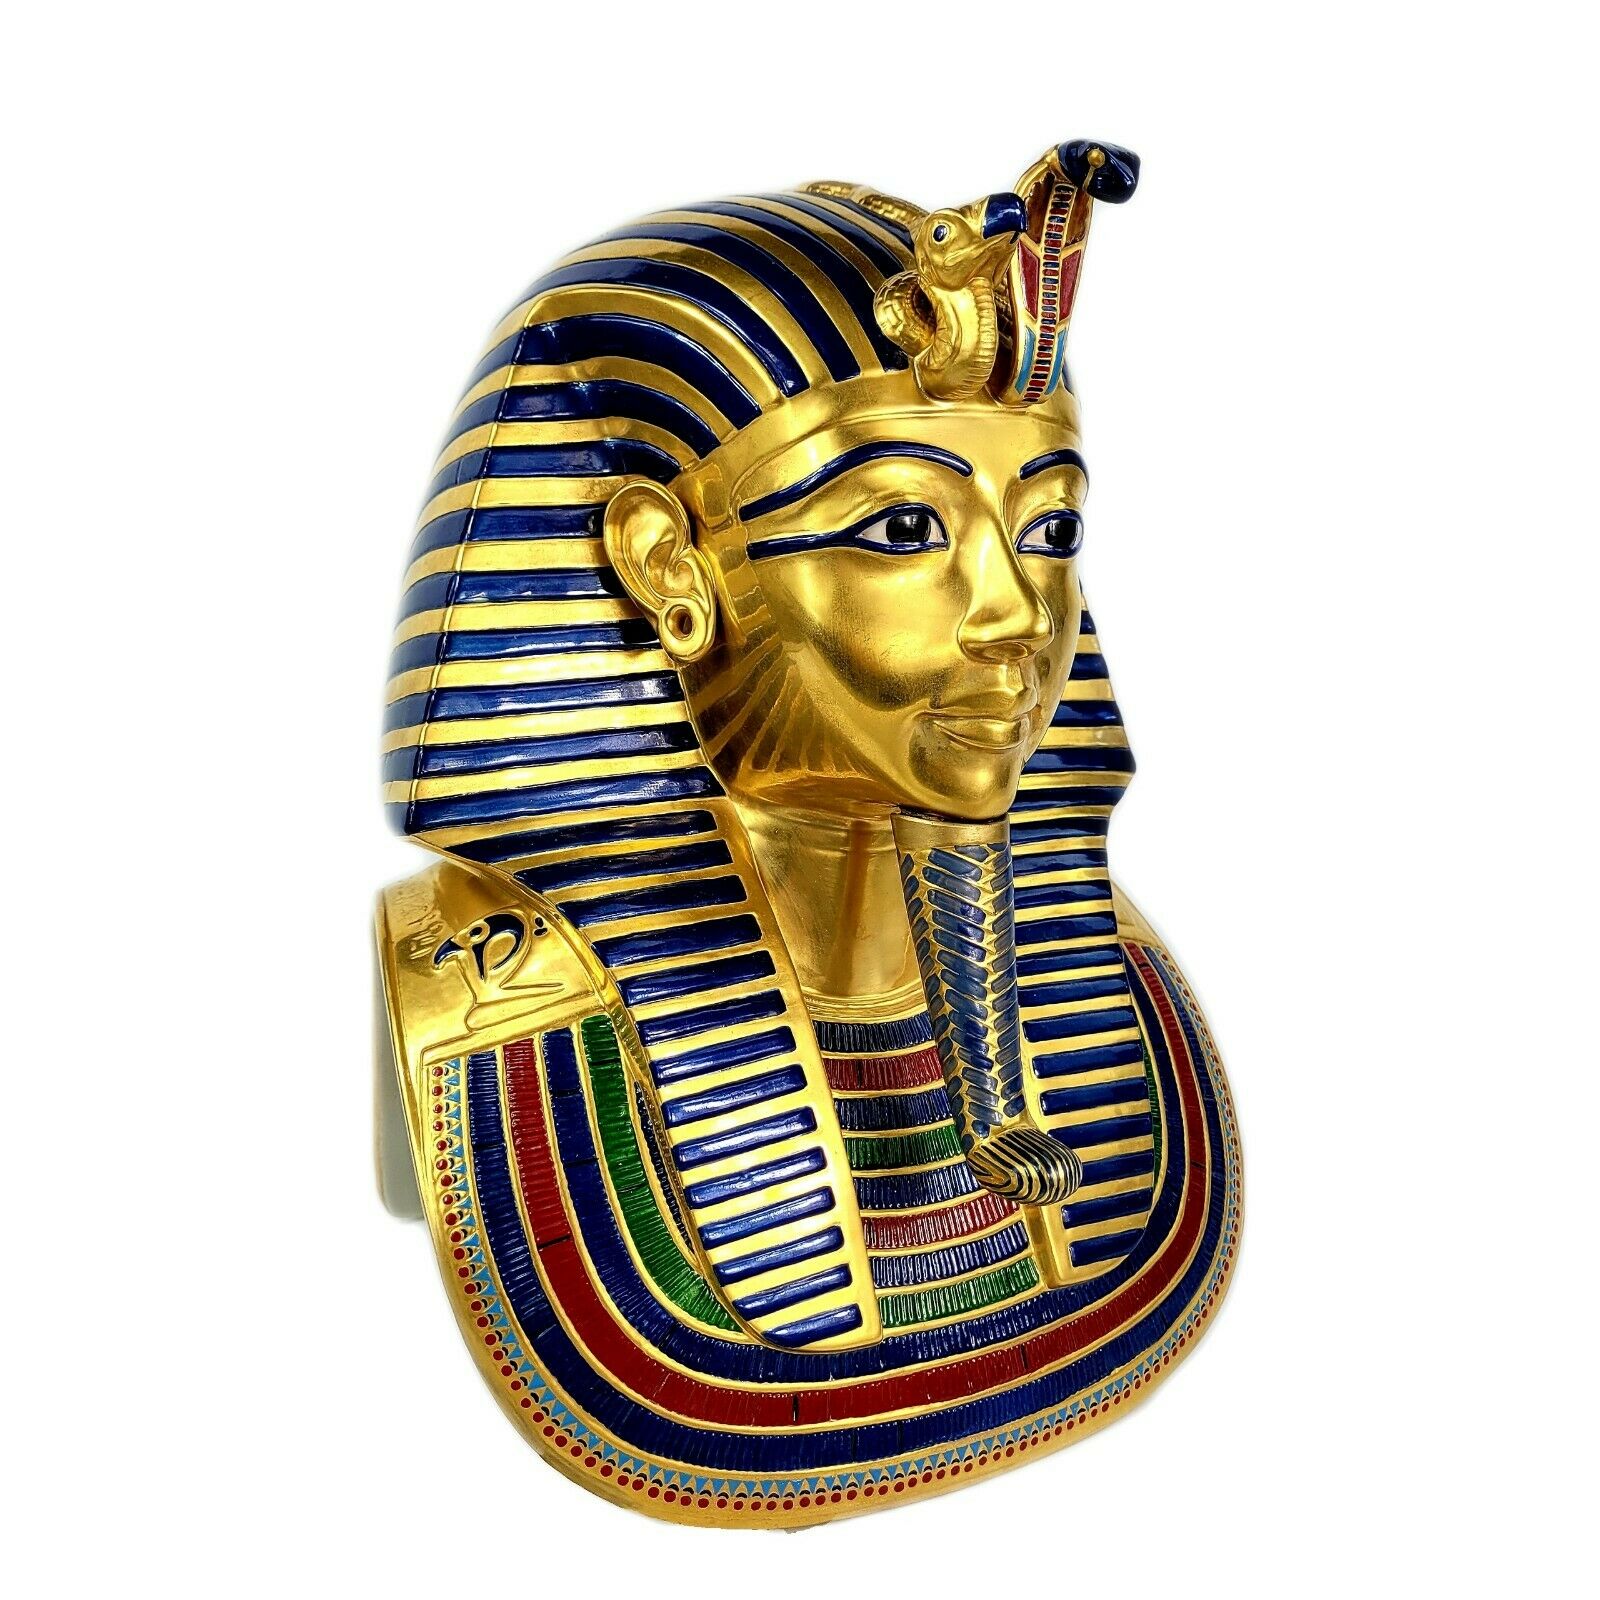 Boehm Porcelain King Tutankhamun Burial Mask Egyptian Salutes The Mask King Tut